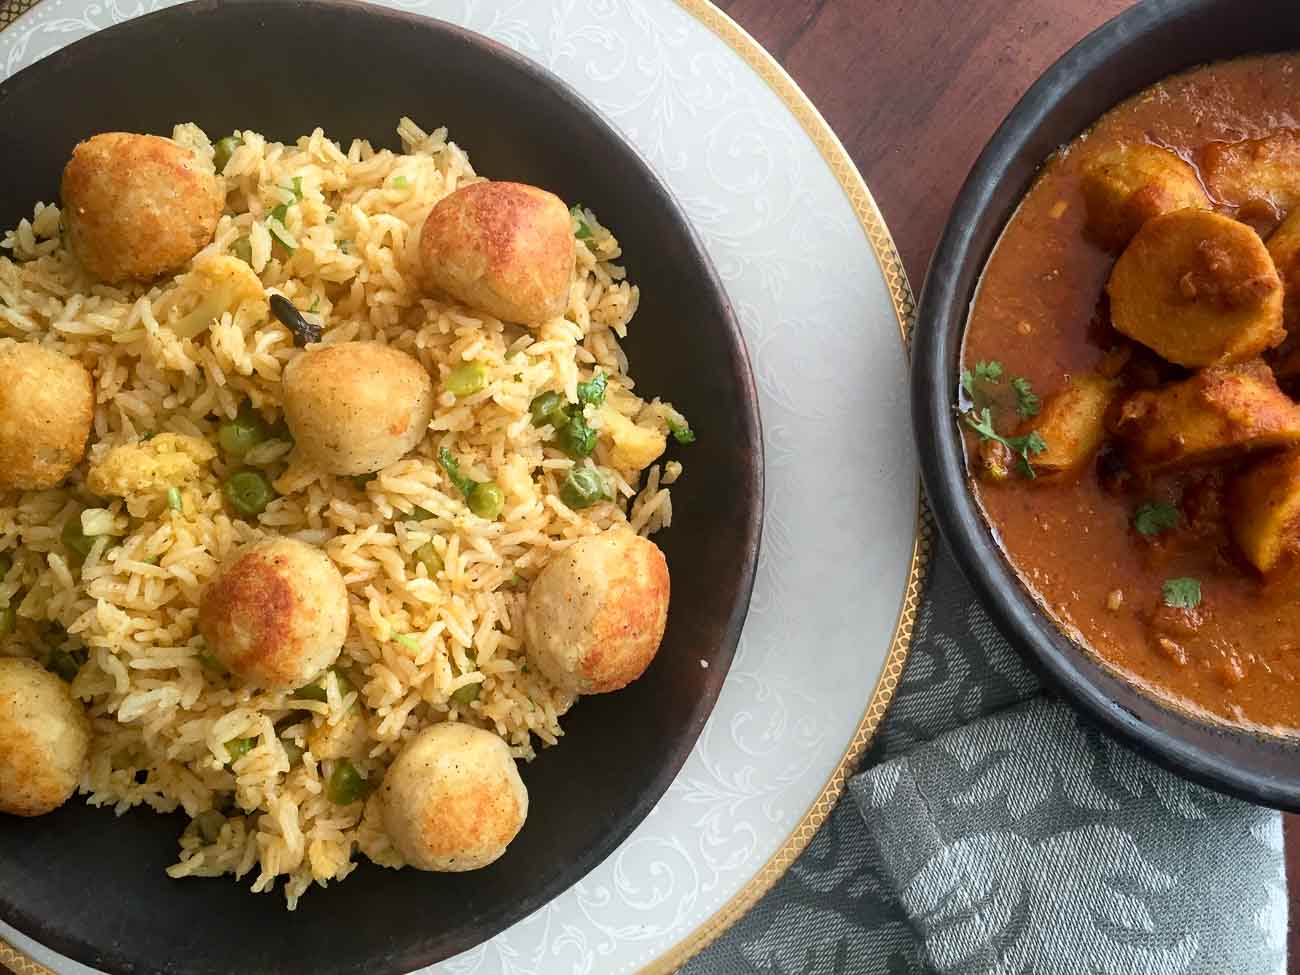 Motiya Chilman Pulao Recipe - Vegetable Rice Topped With Paneer Balls